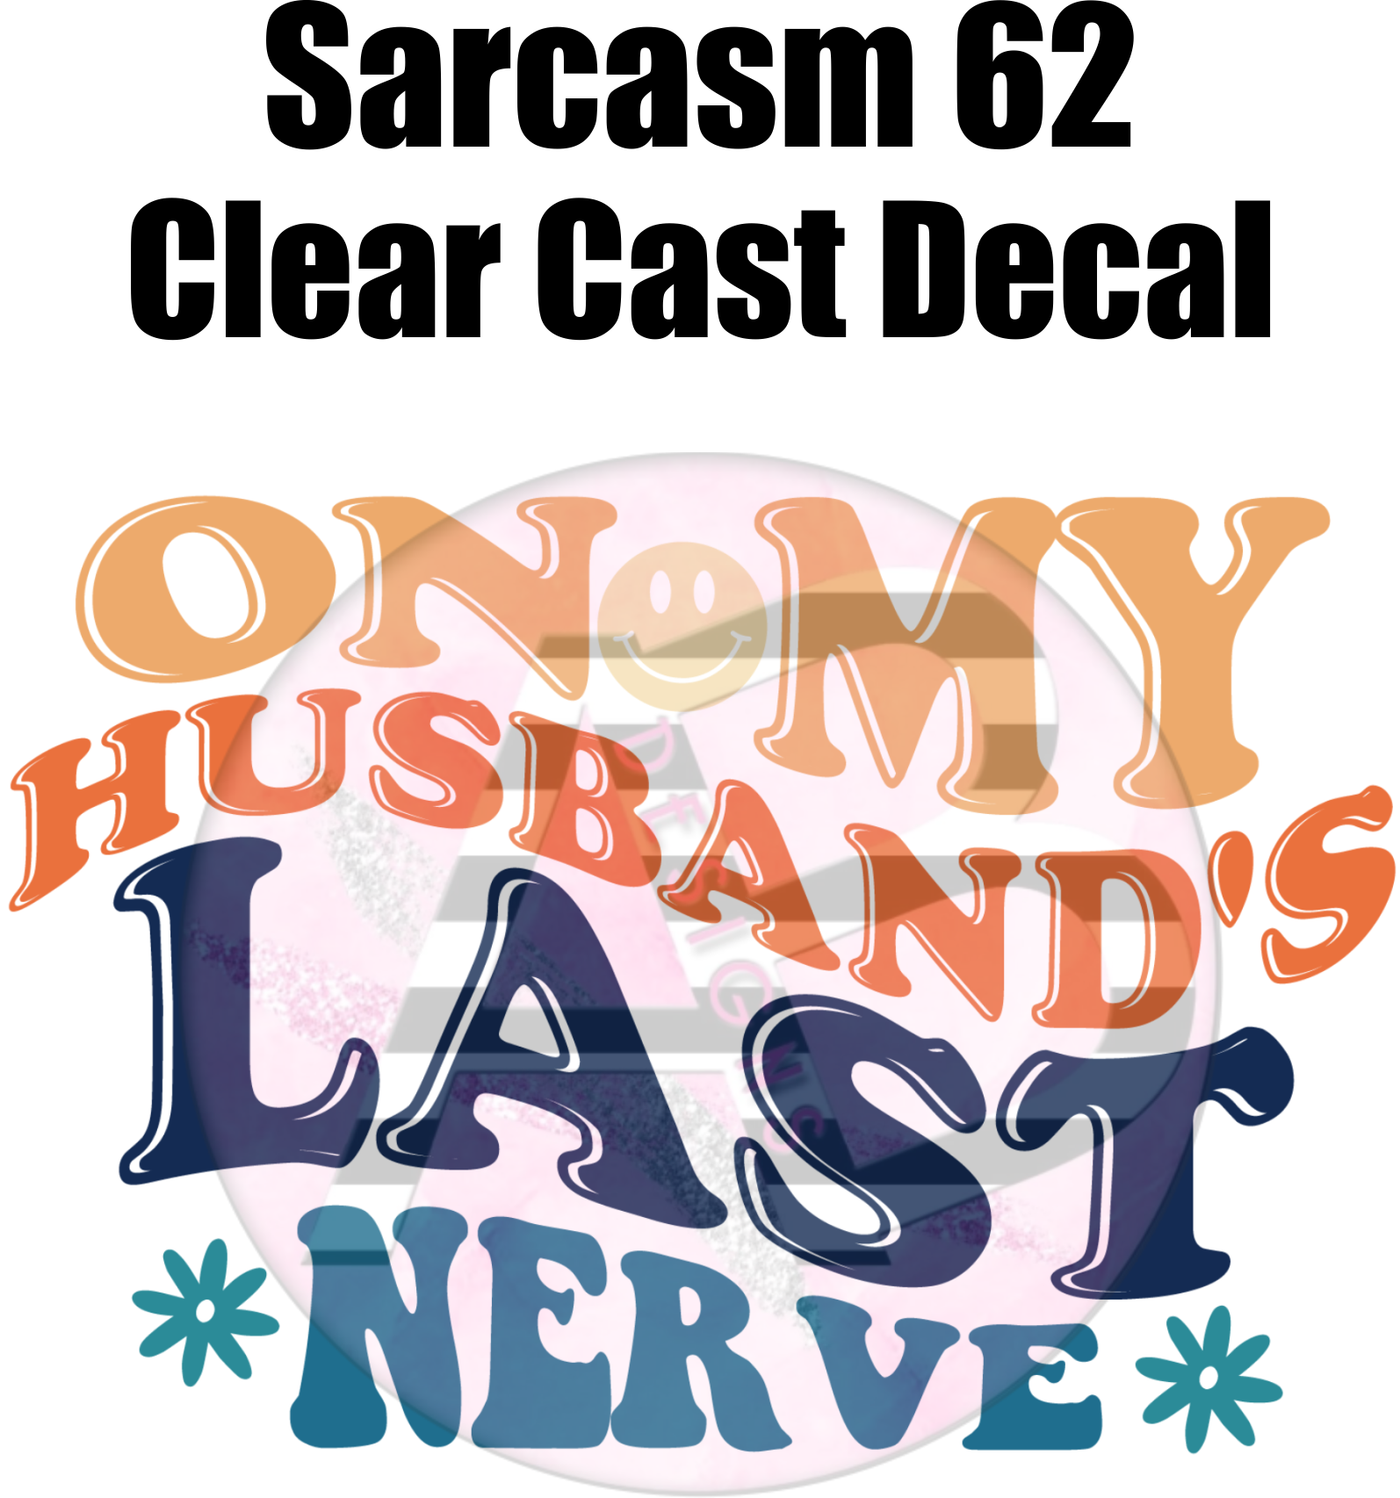 Sarcasm 62 - Clear Cast Decal - 254